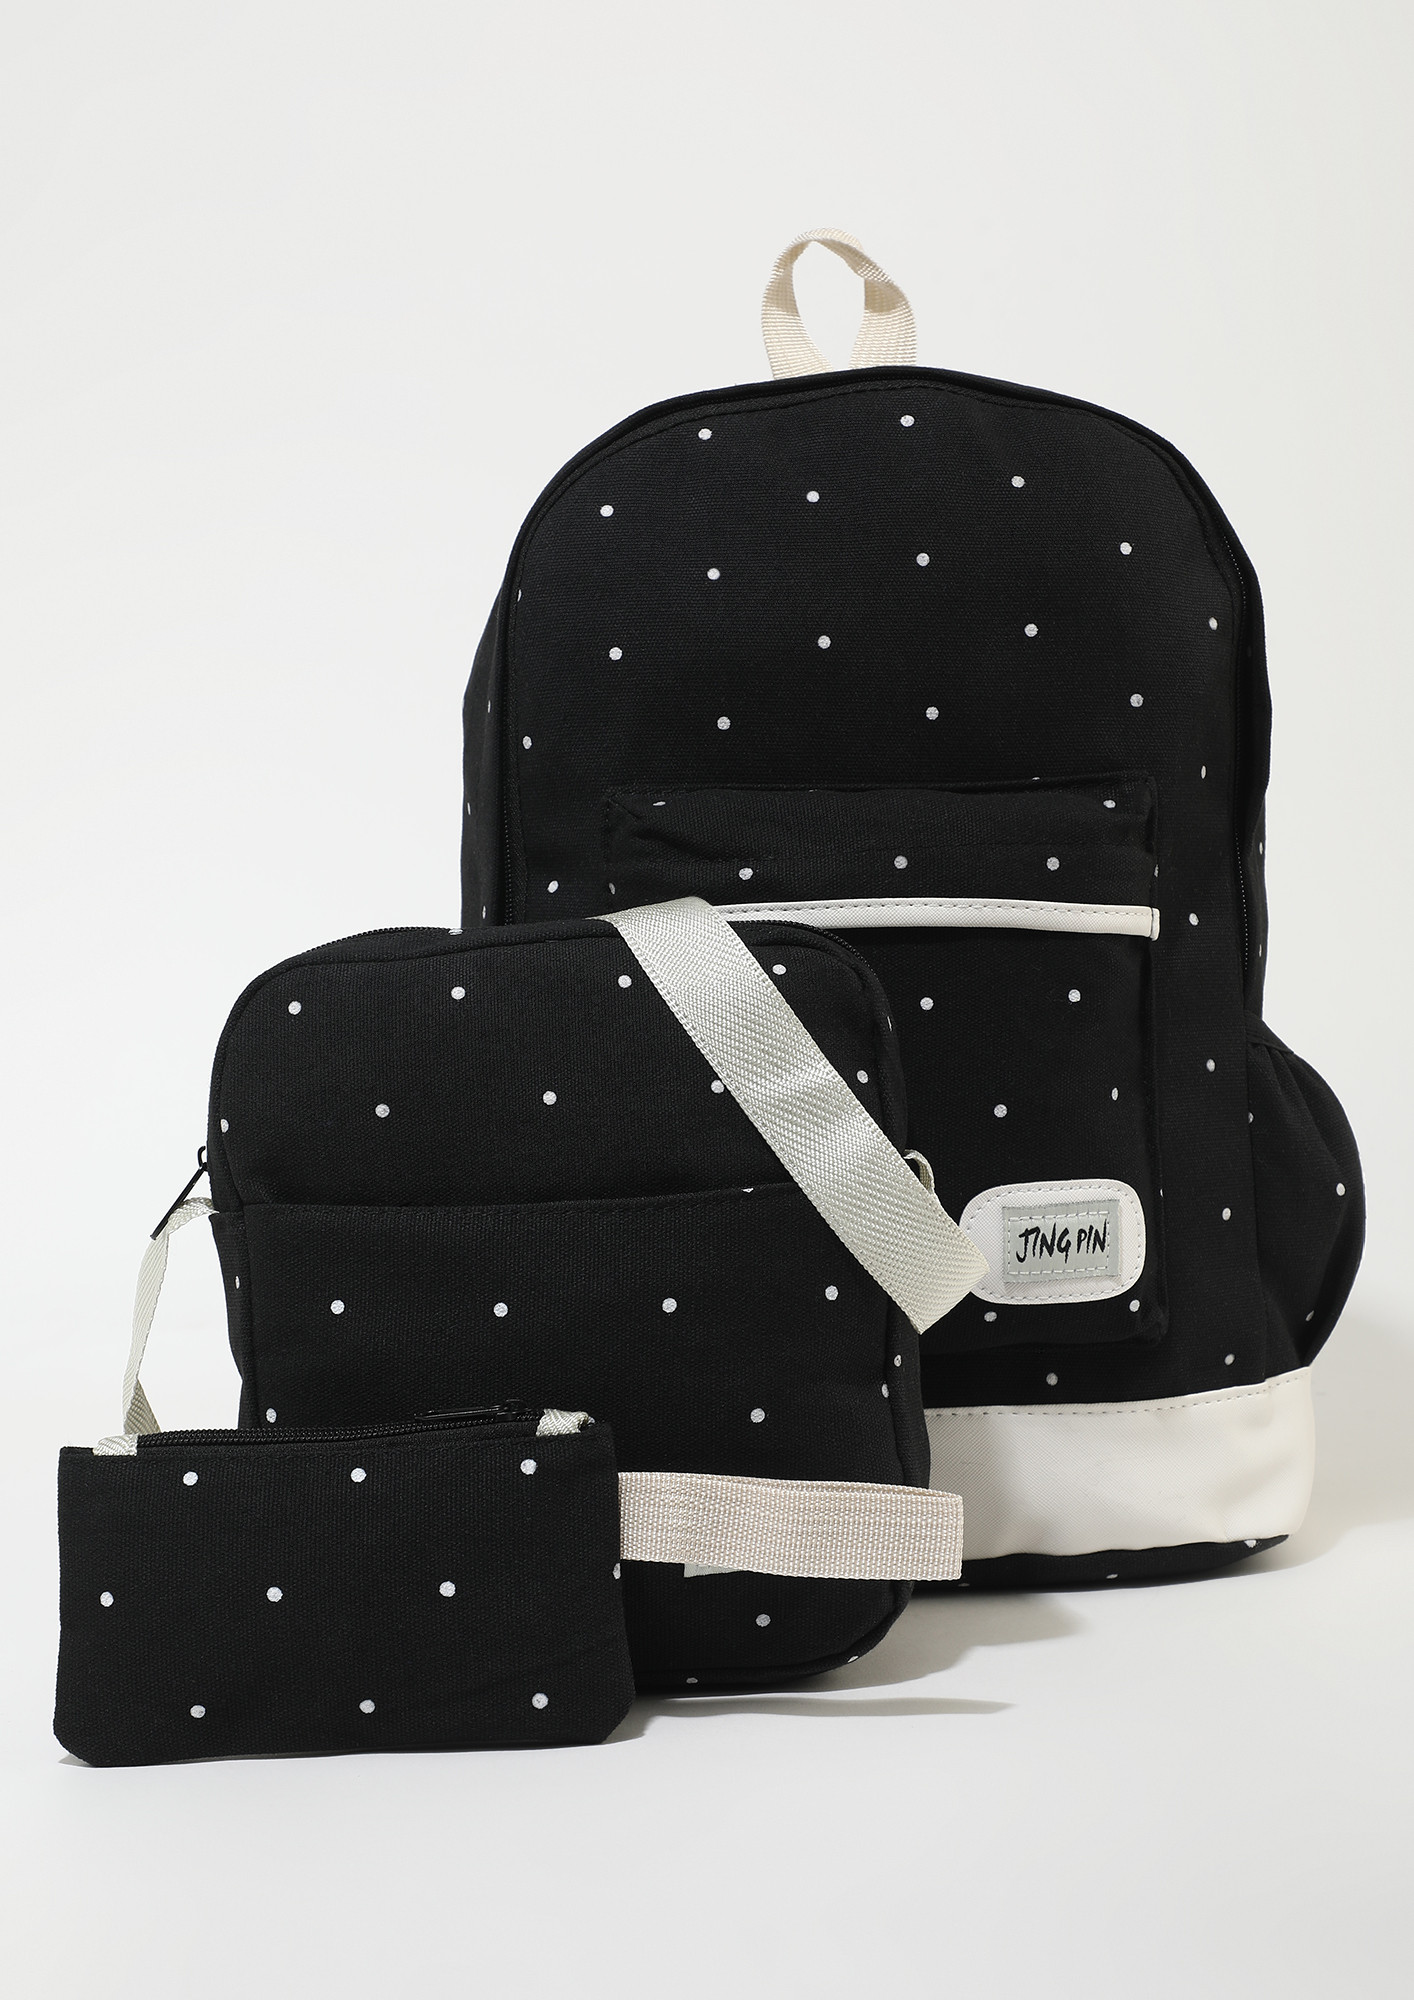 Black And White Polka Dot Bags